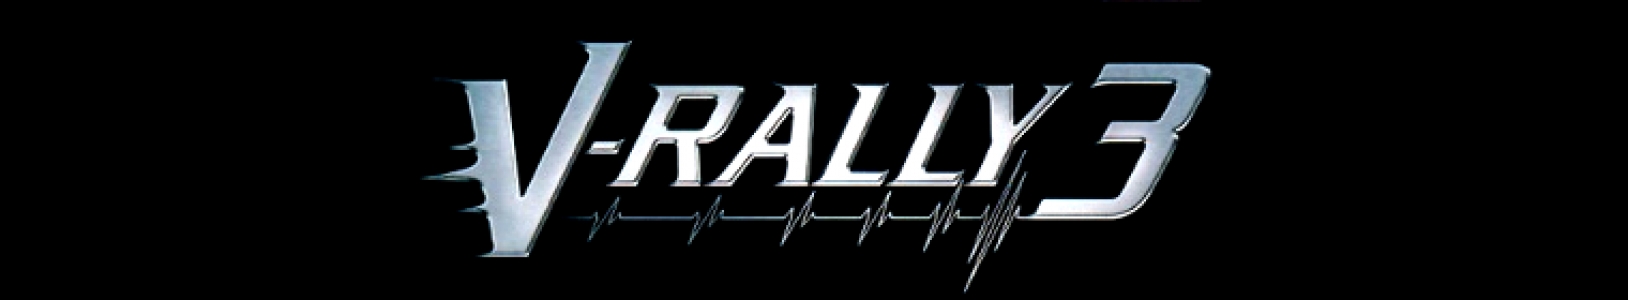 V-Rally 3 banner